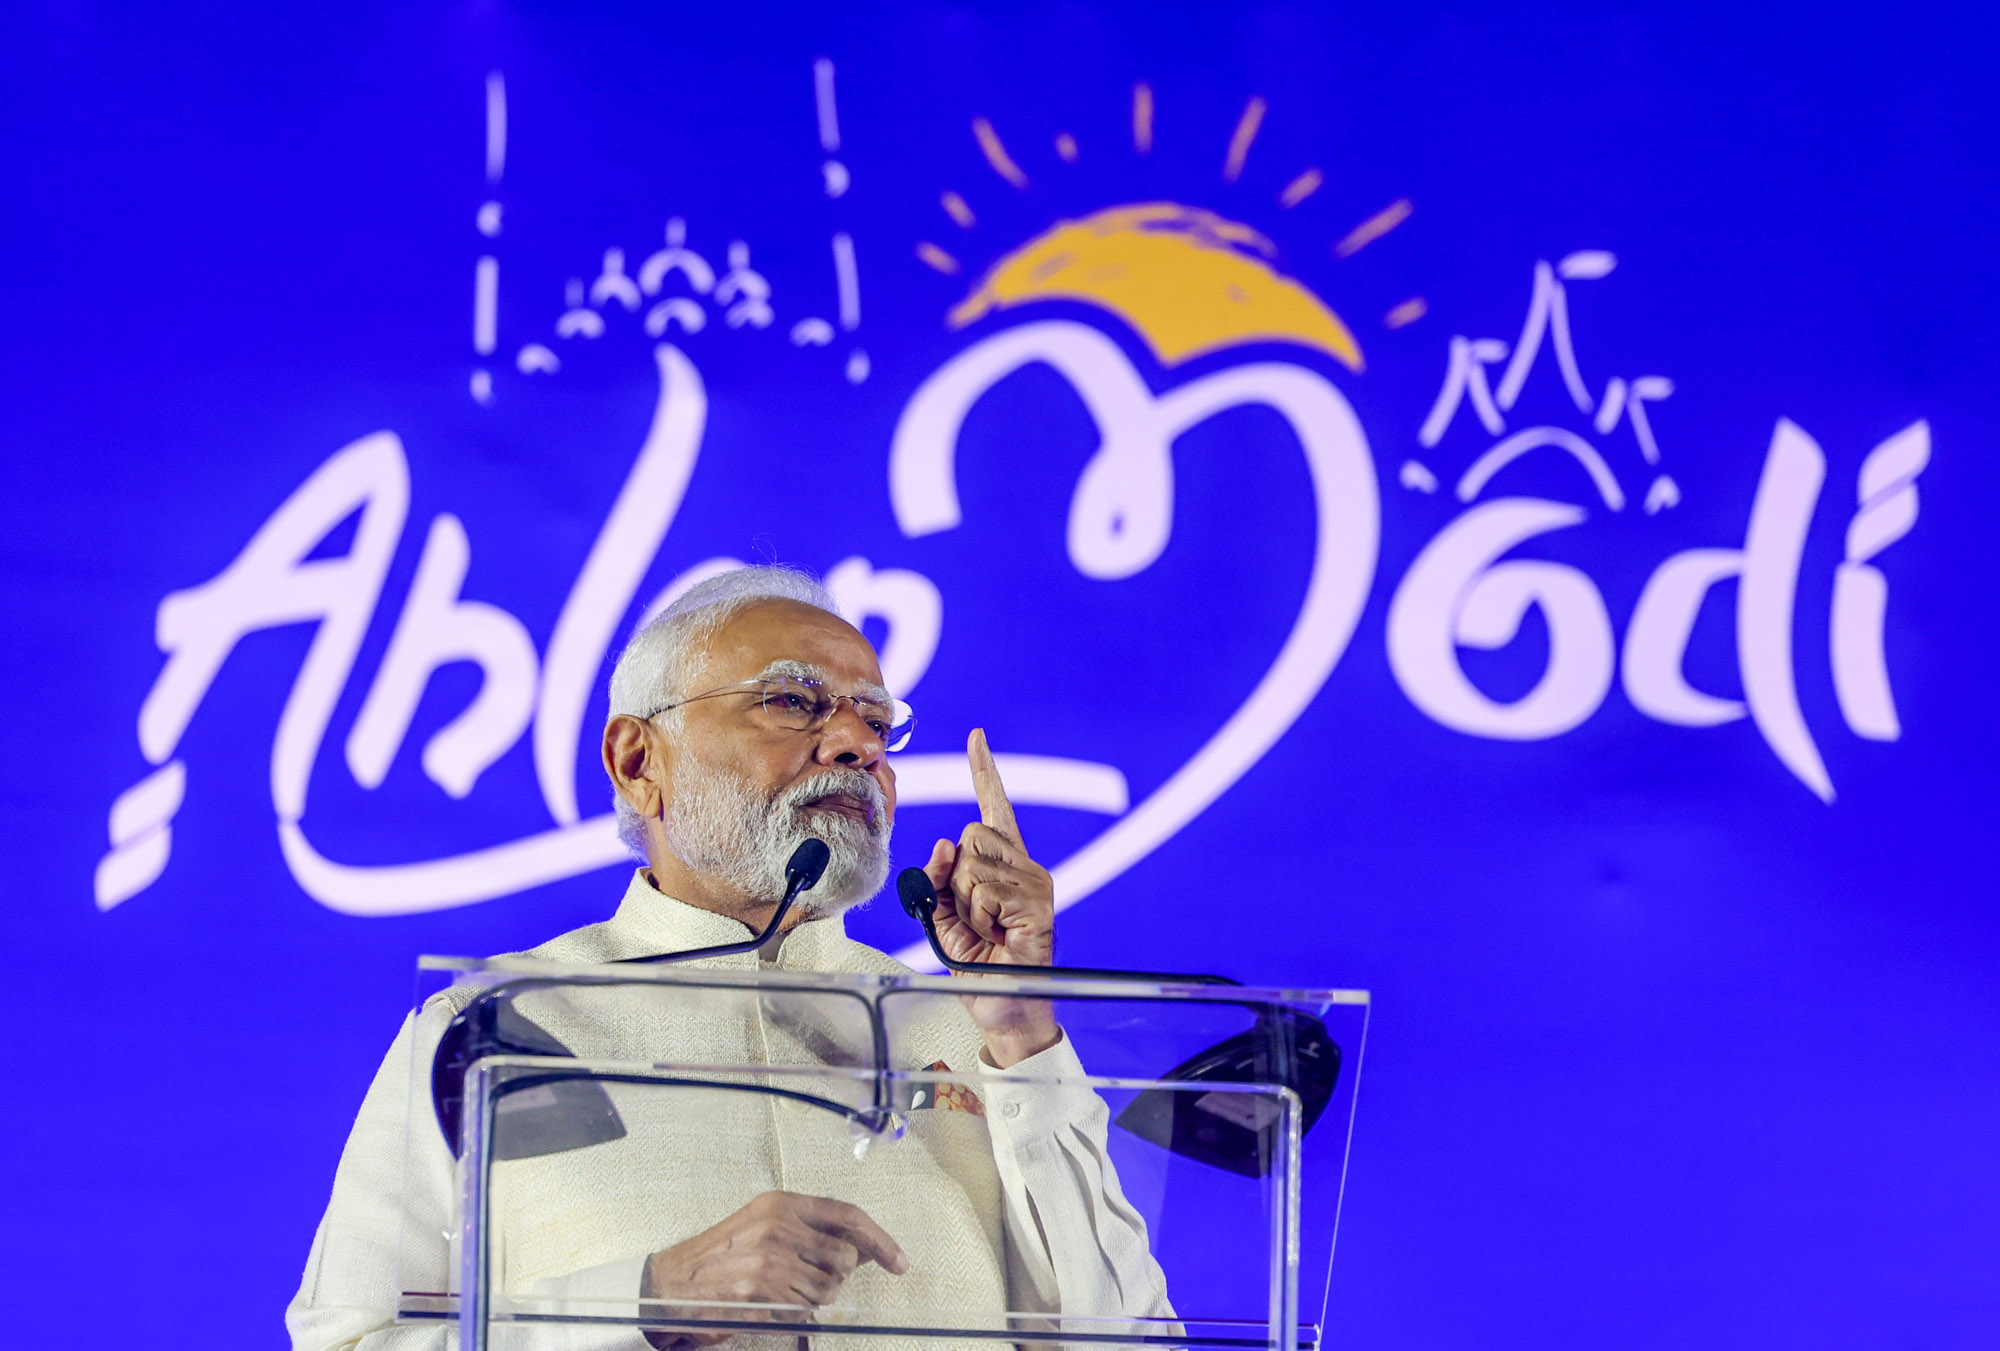 PM addressing the gathering at the Ahlan Modi event in Abu Dhabi, UAE on February 13, 2024.